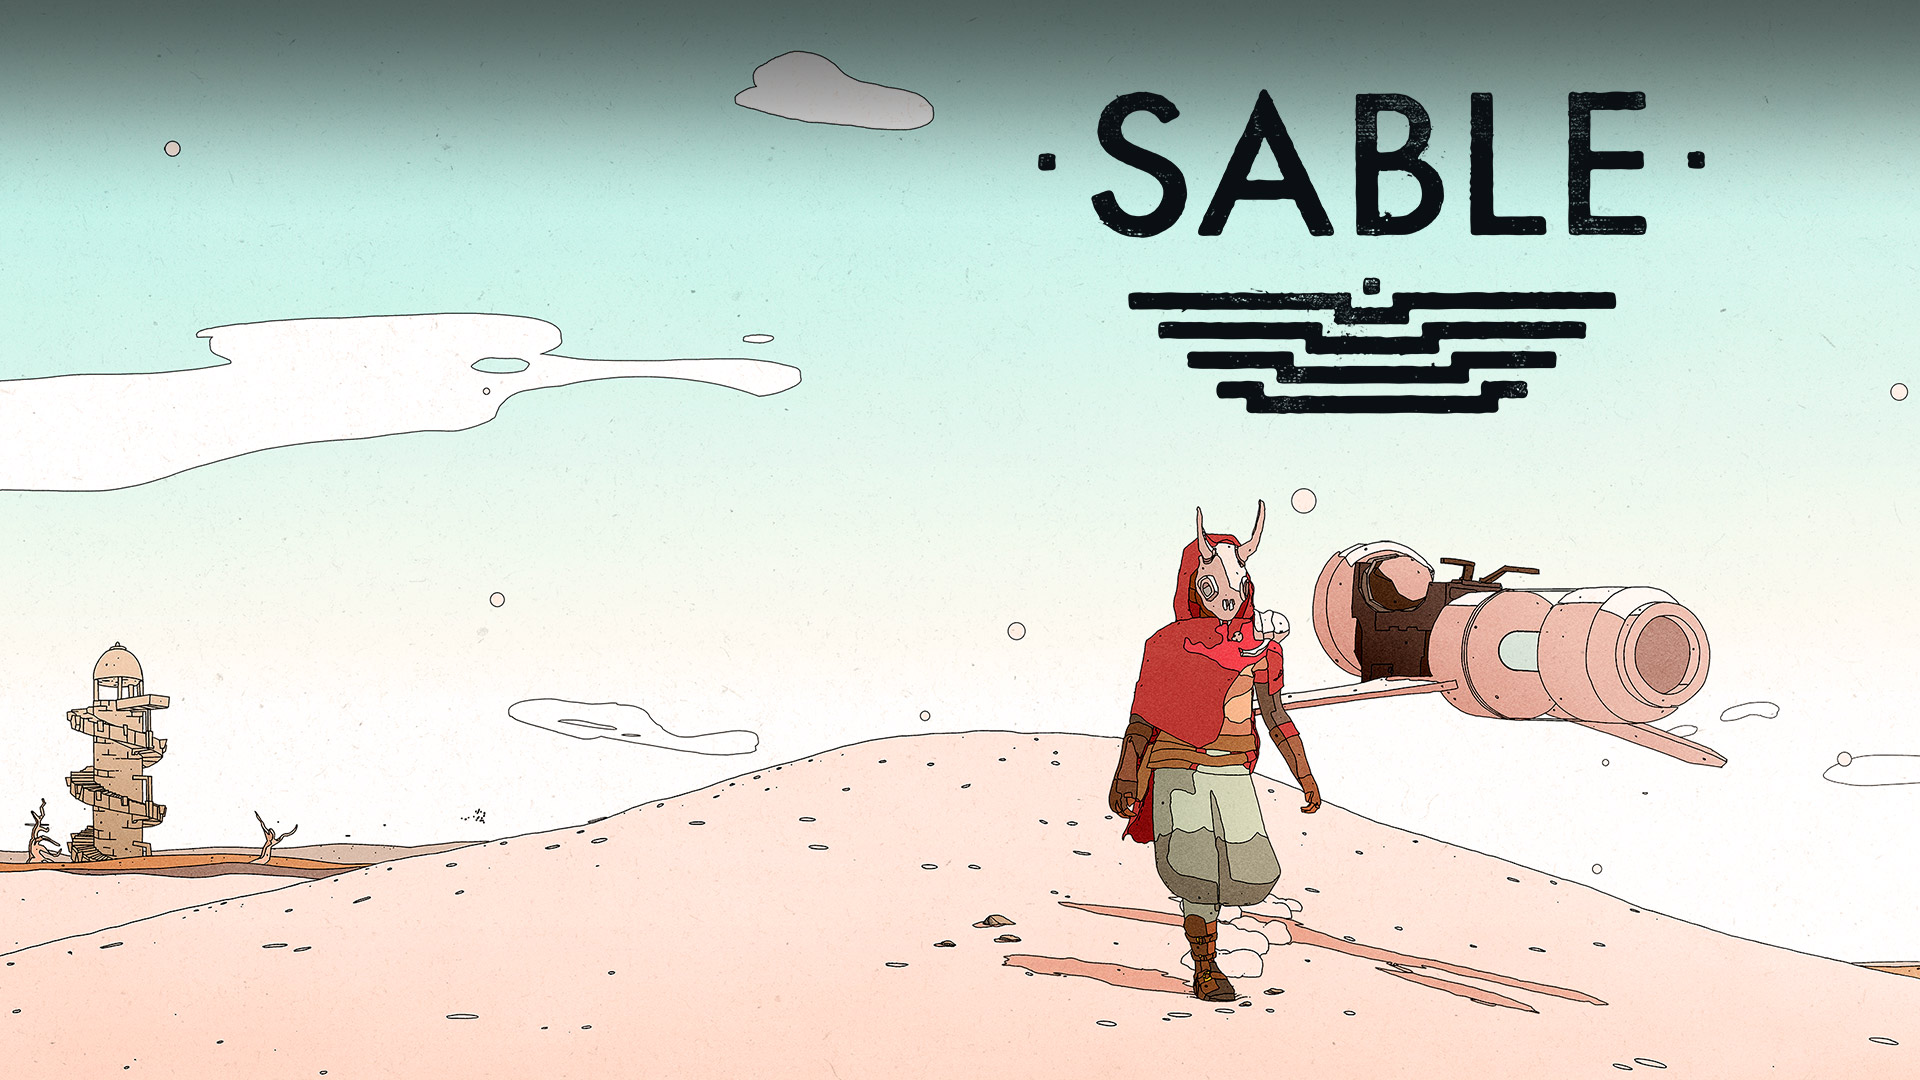 Sable 標誌，Sable 與懸浮單車在沙漠裡